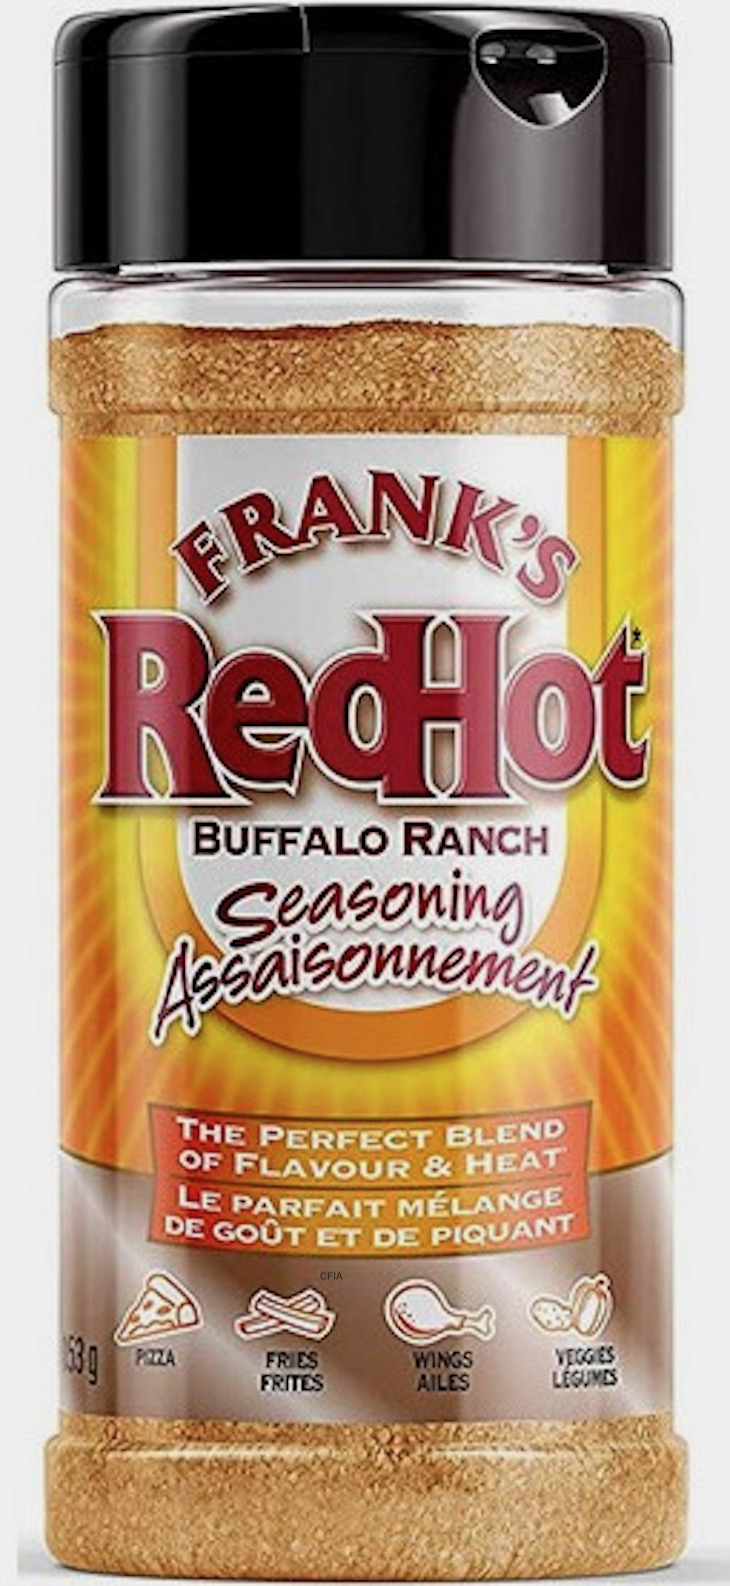 Frank's RedHot Buffalo Ranch Seasoning Recalled in Canada